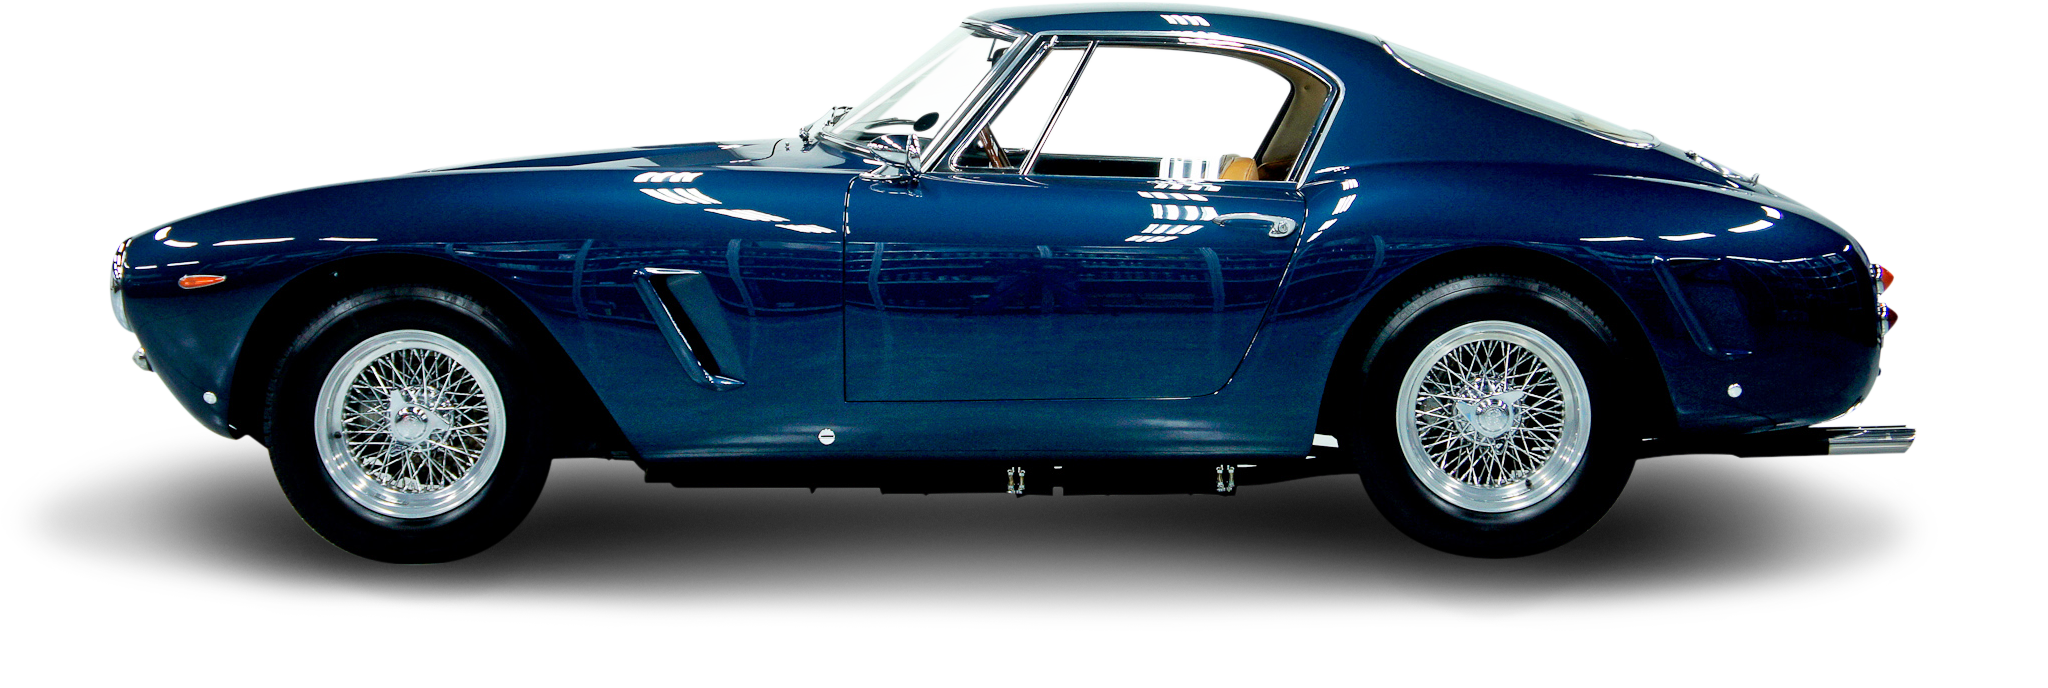 WAX-IT Detailing Ferrari Classic Car